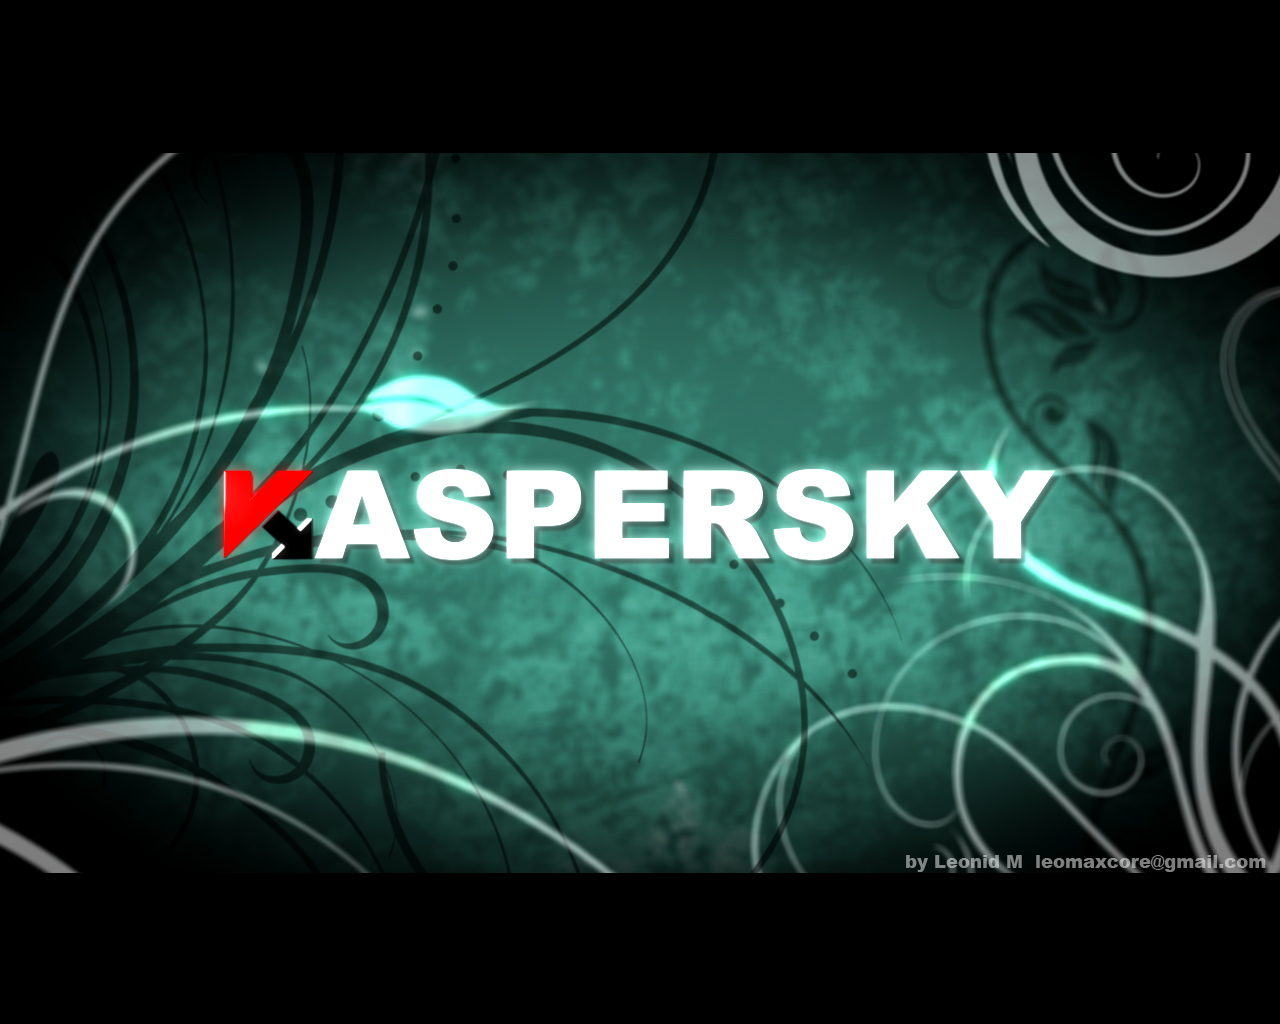 The Kaspersky Antivirus